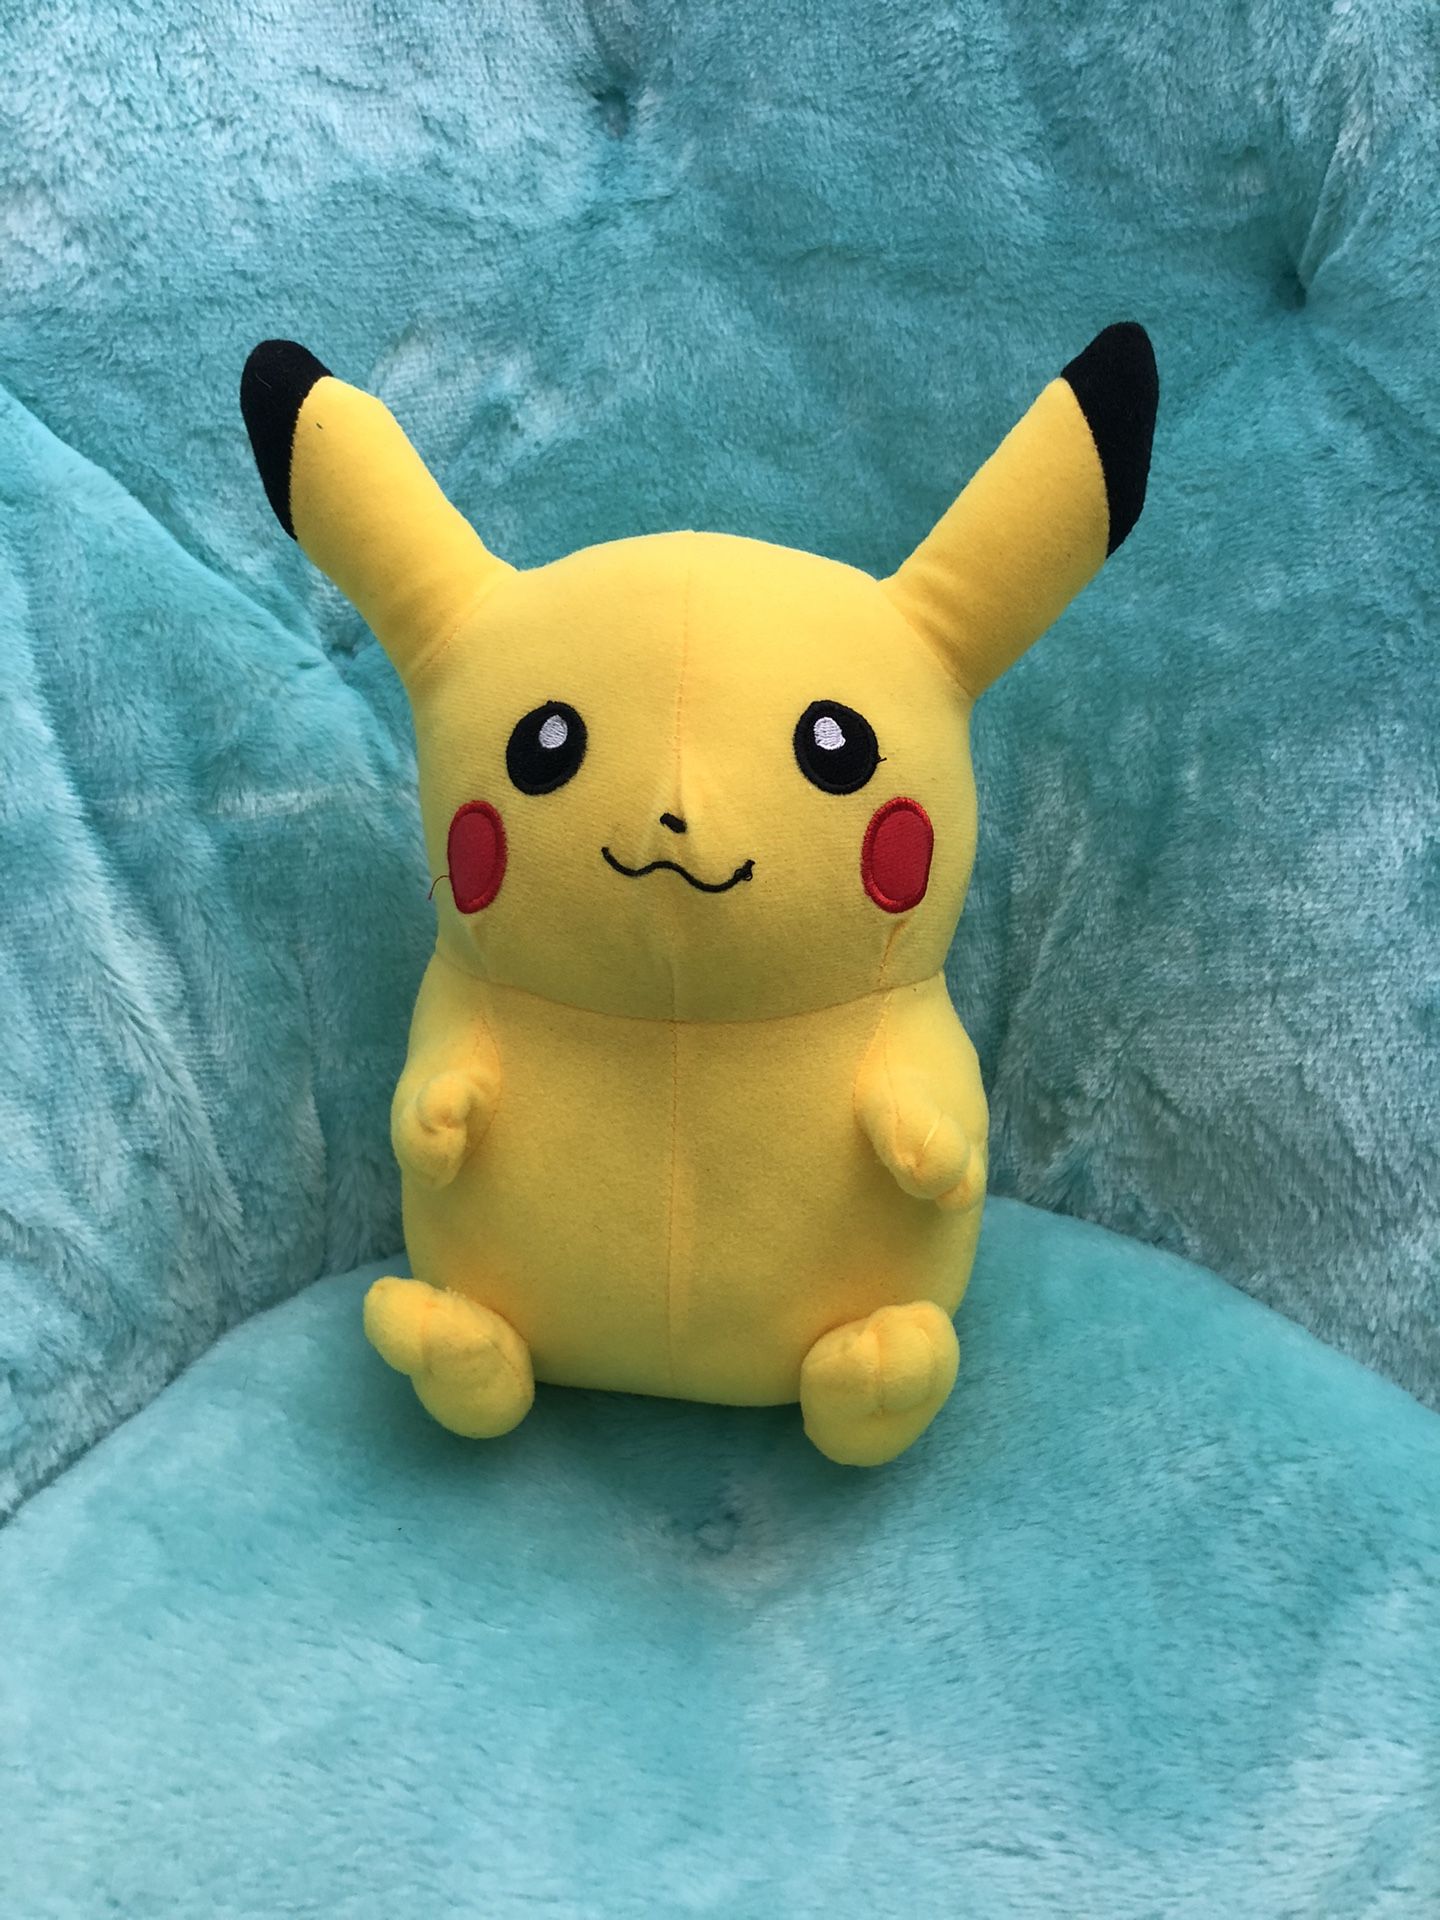 Pokémon Pikachu Stuffed Animal 10 Inches Tall